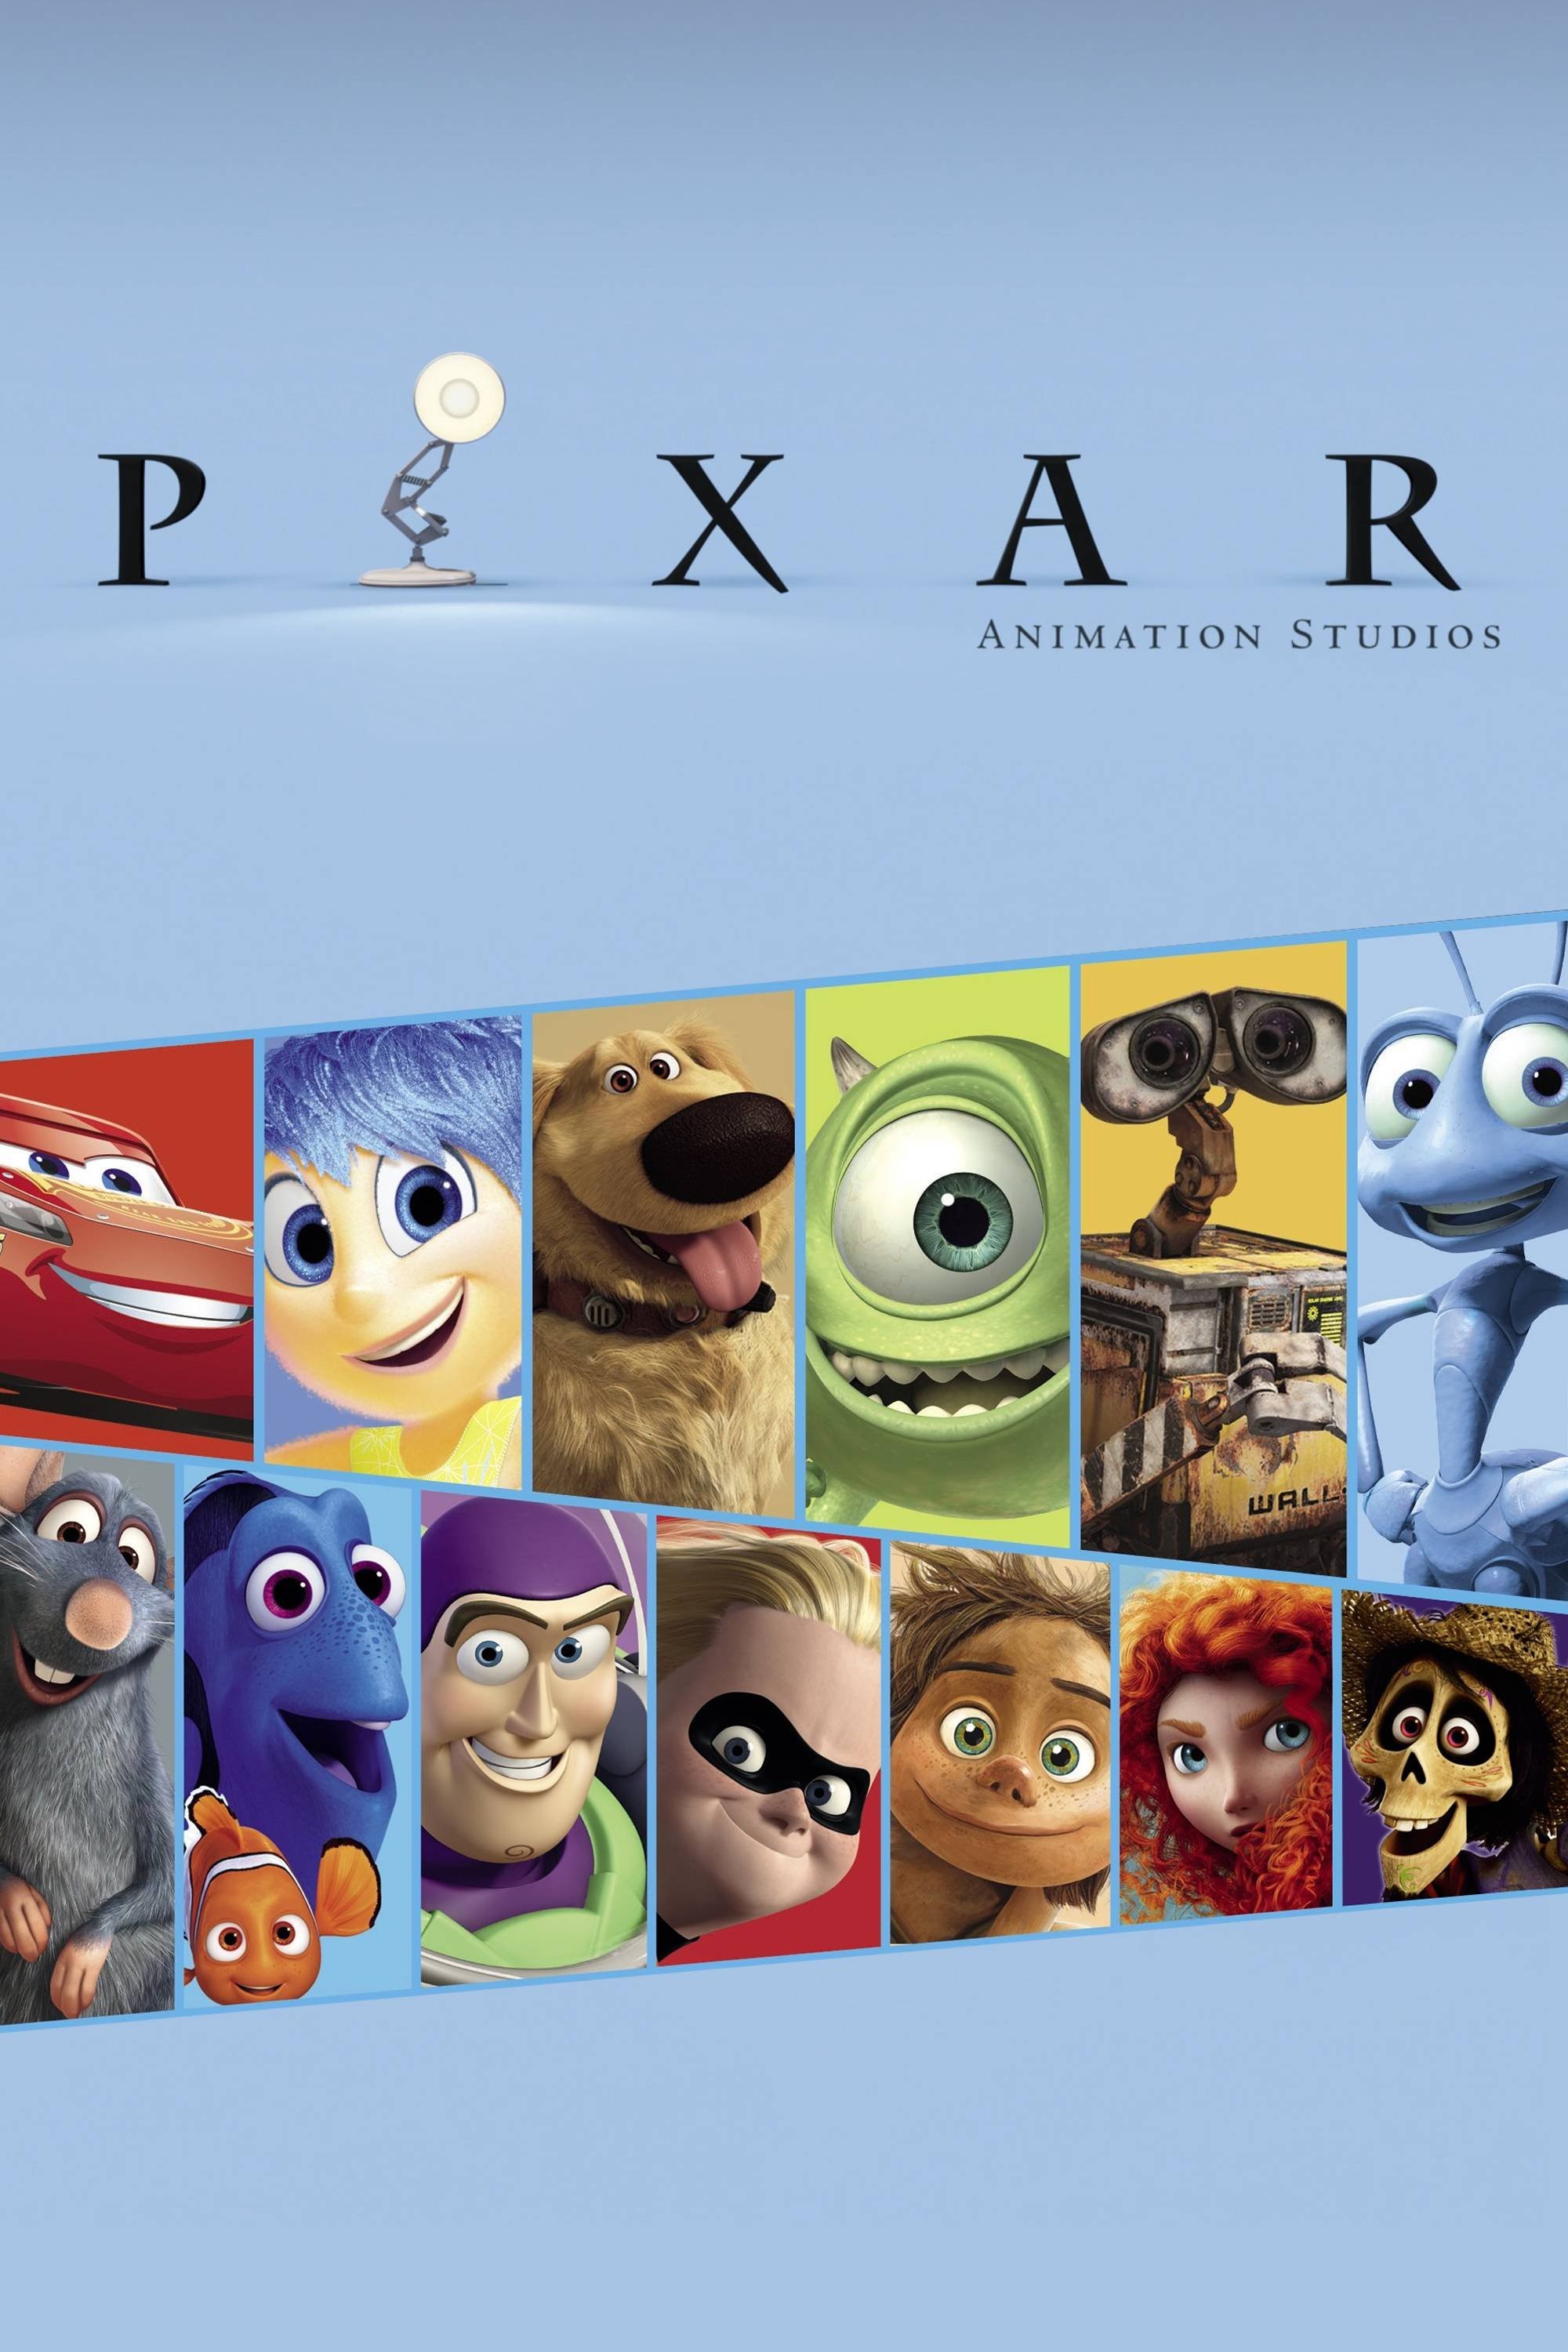 Pixar collection. Пиксар аниматион. Пиксар анимейшен студио. Киностудия Пиксар. Дисней Пиксар студия.